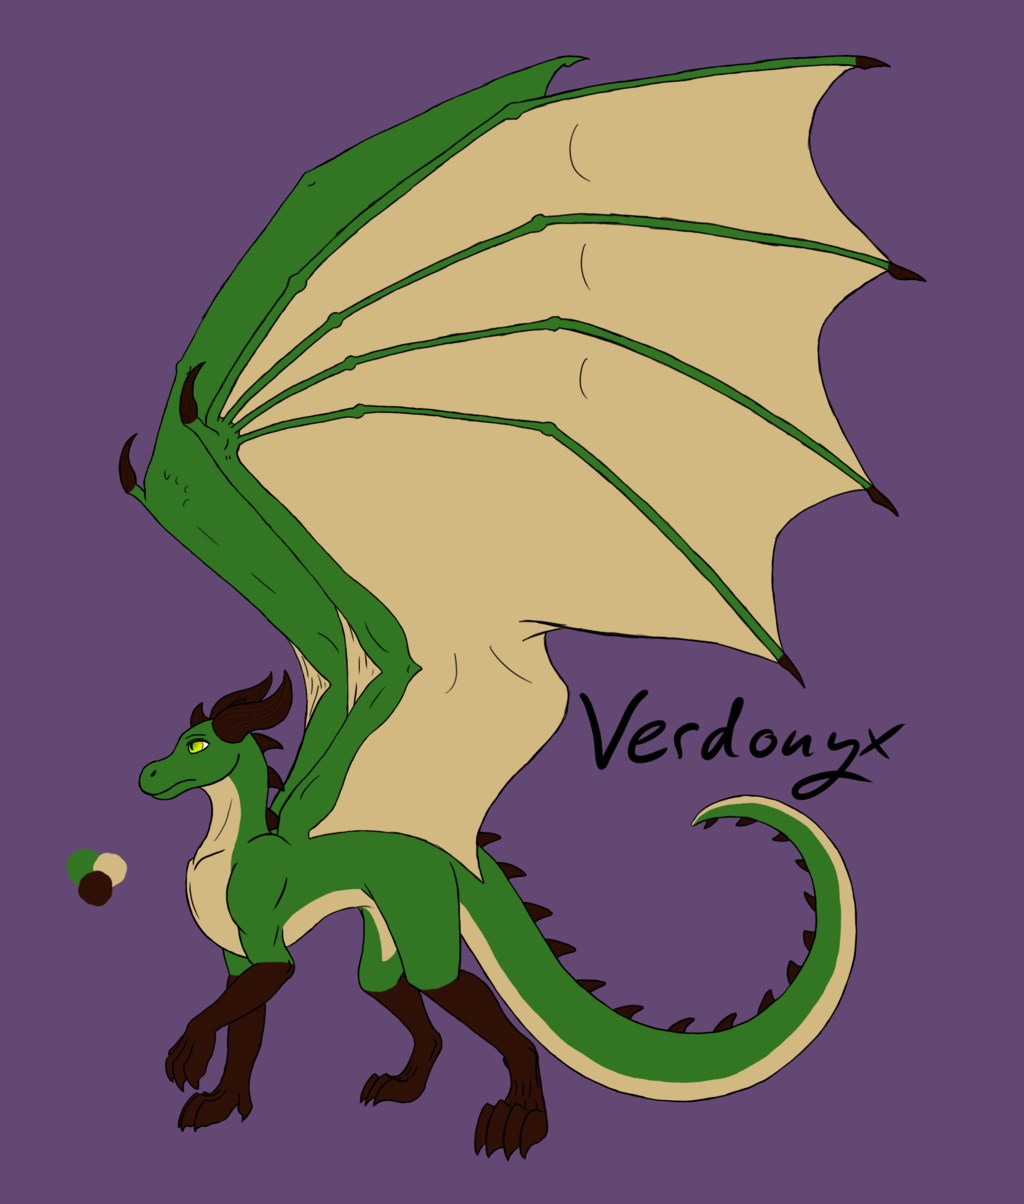 Verdonyx, the Forest Dragon